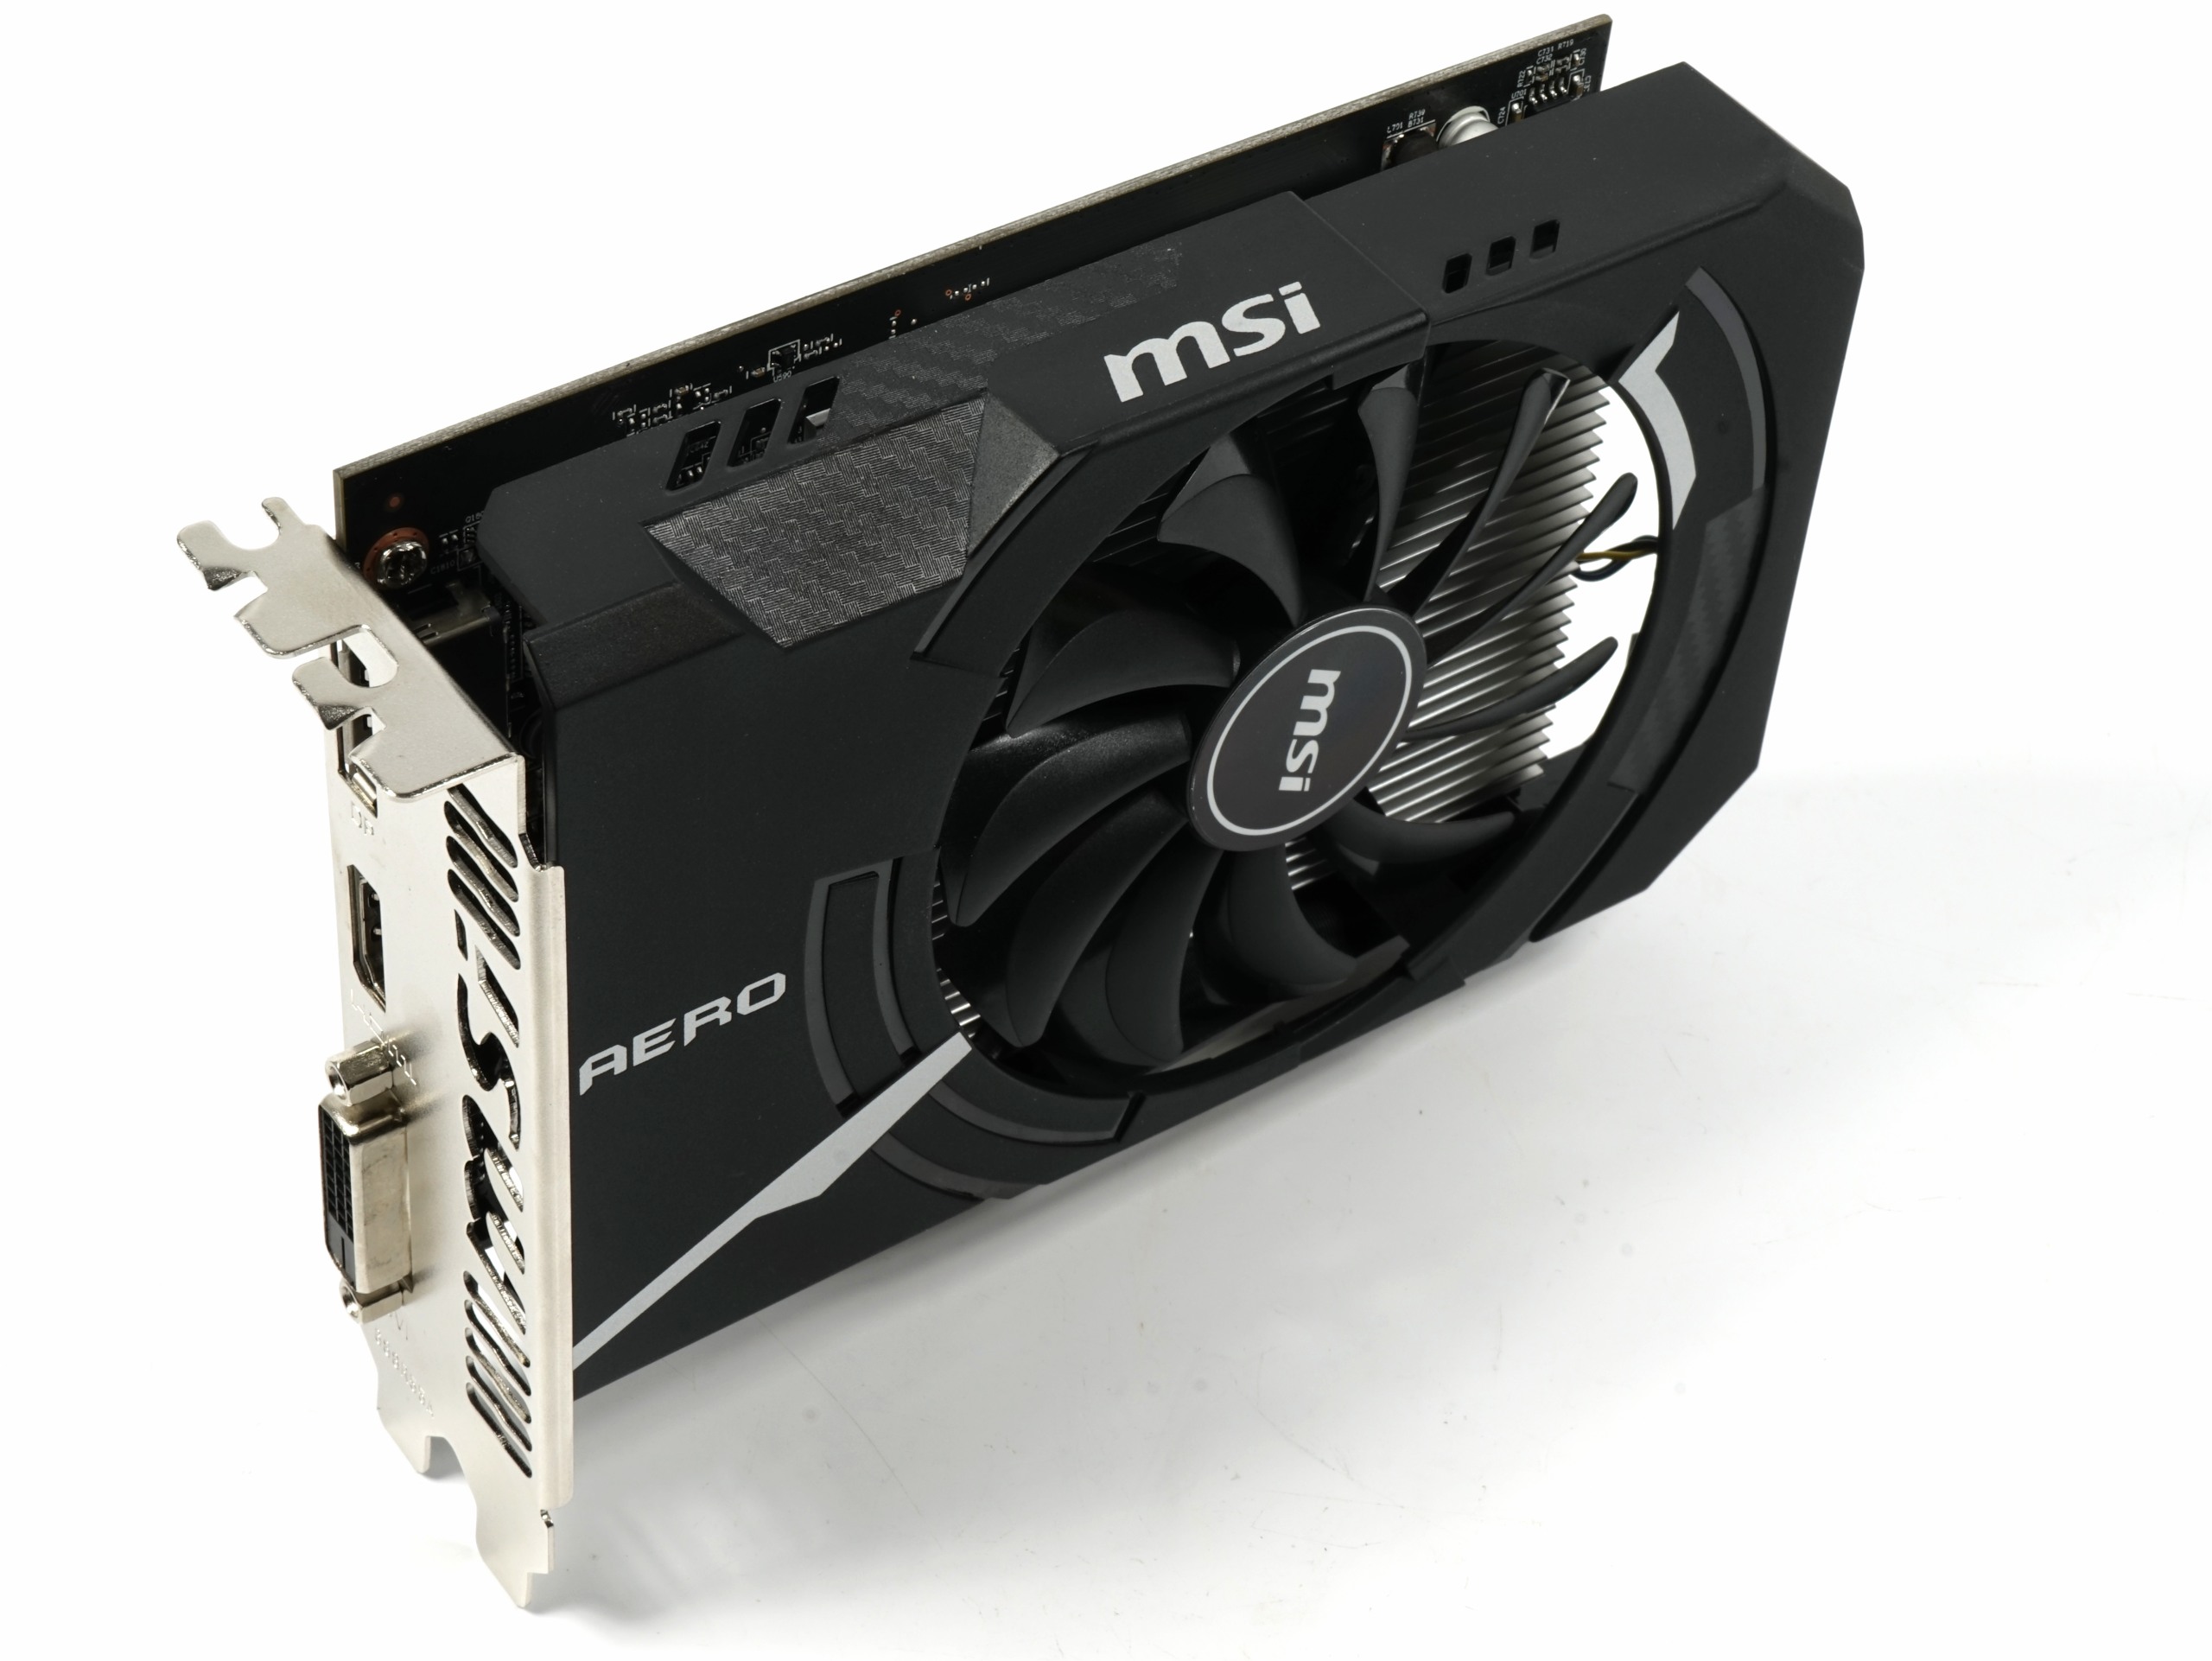 AMD Radeon RX 550 Power Consumption